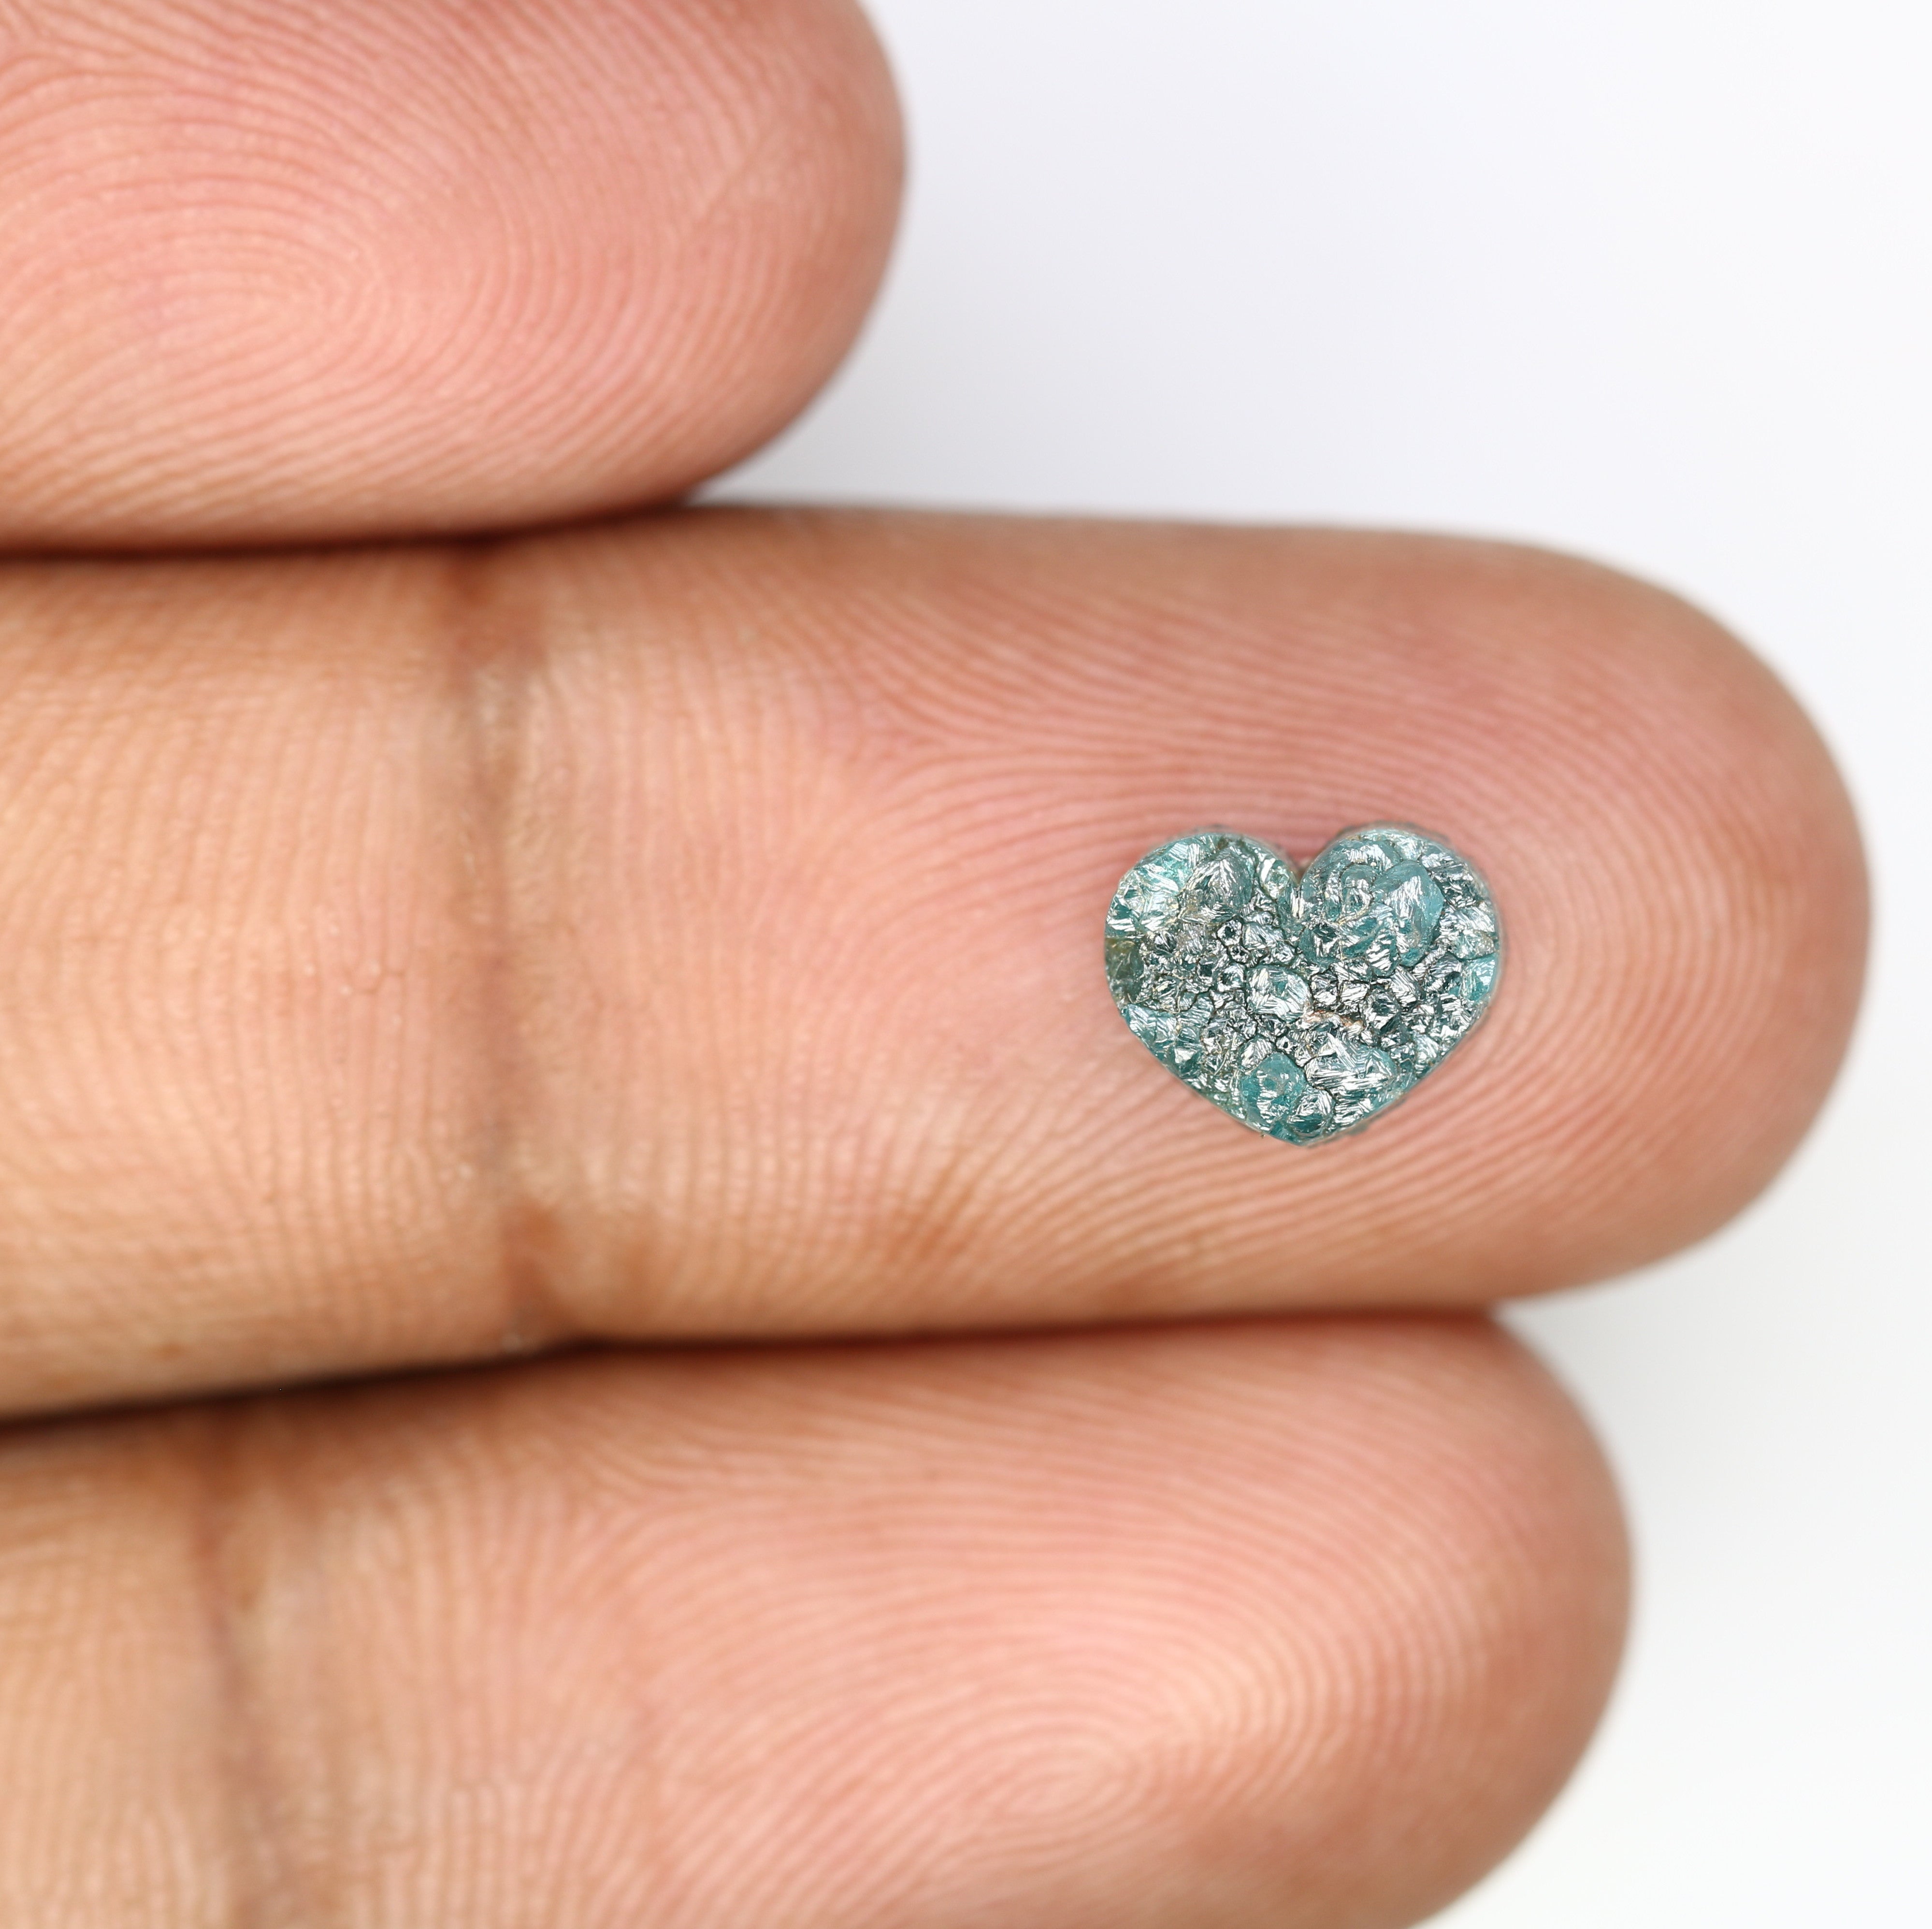 2.08 Carat Heart Shape Diamond Fancy Blue Color Rough Diamond For Wedding Ring